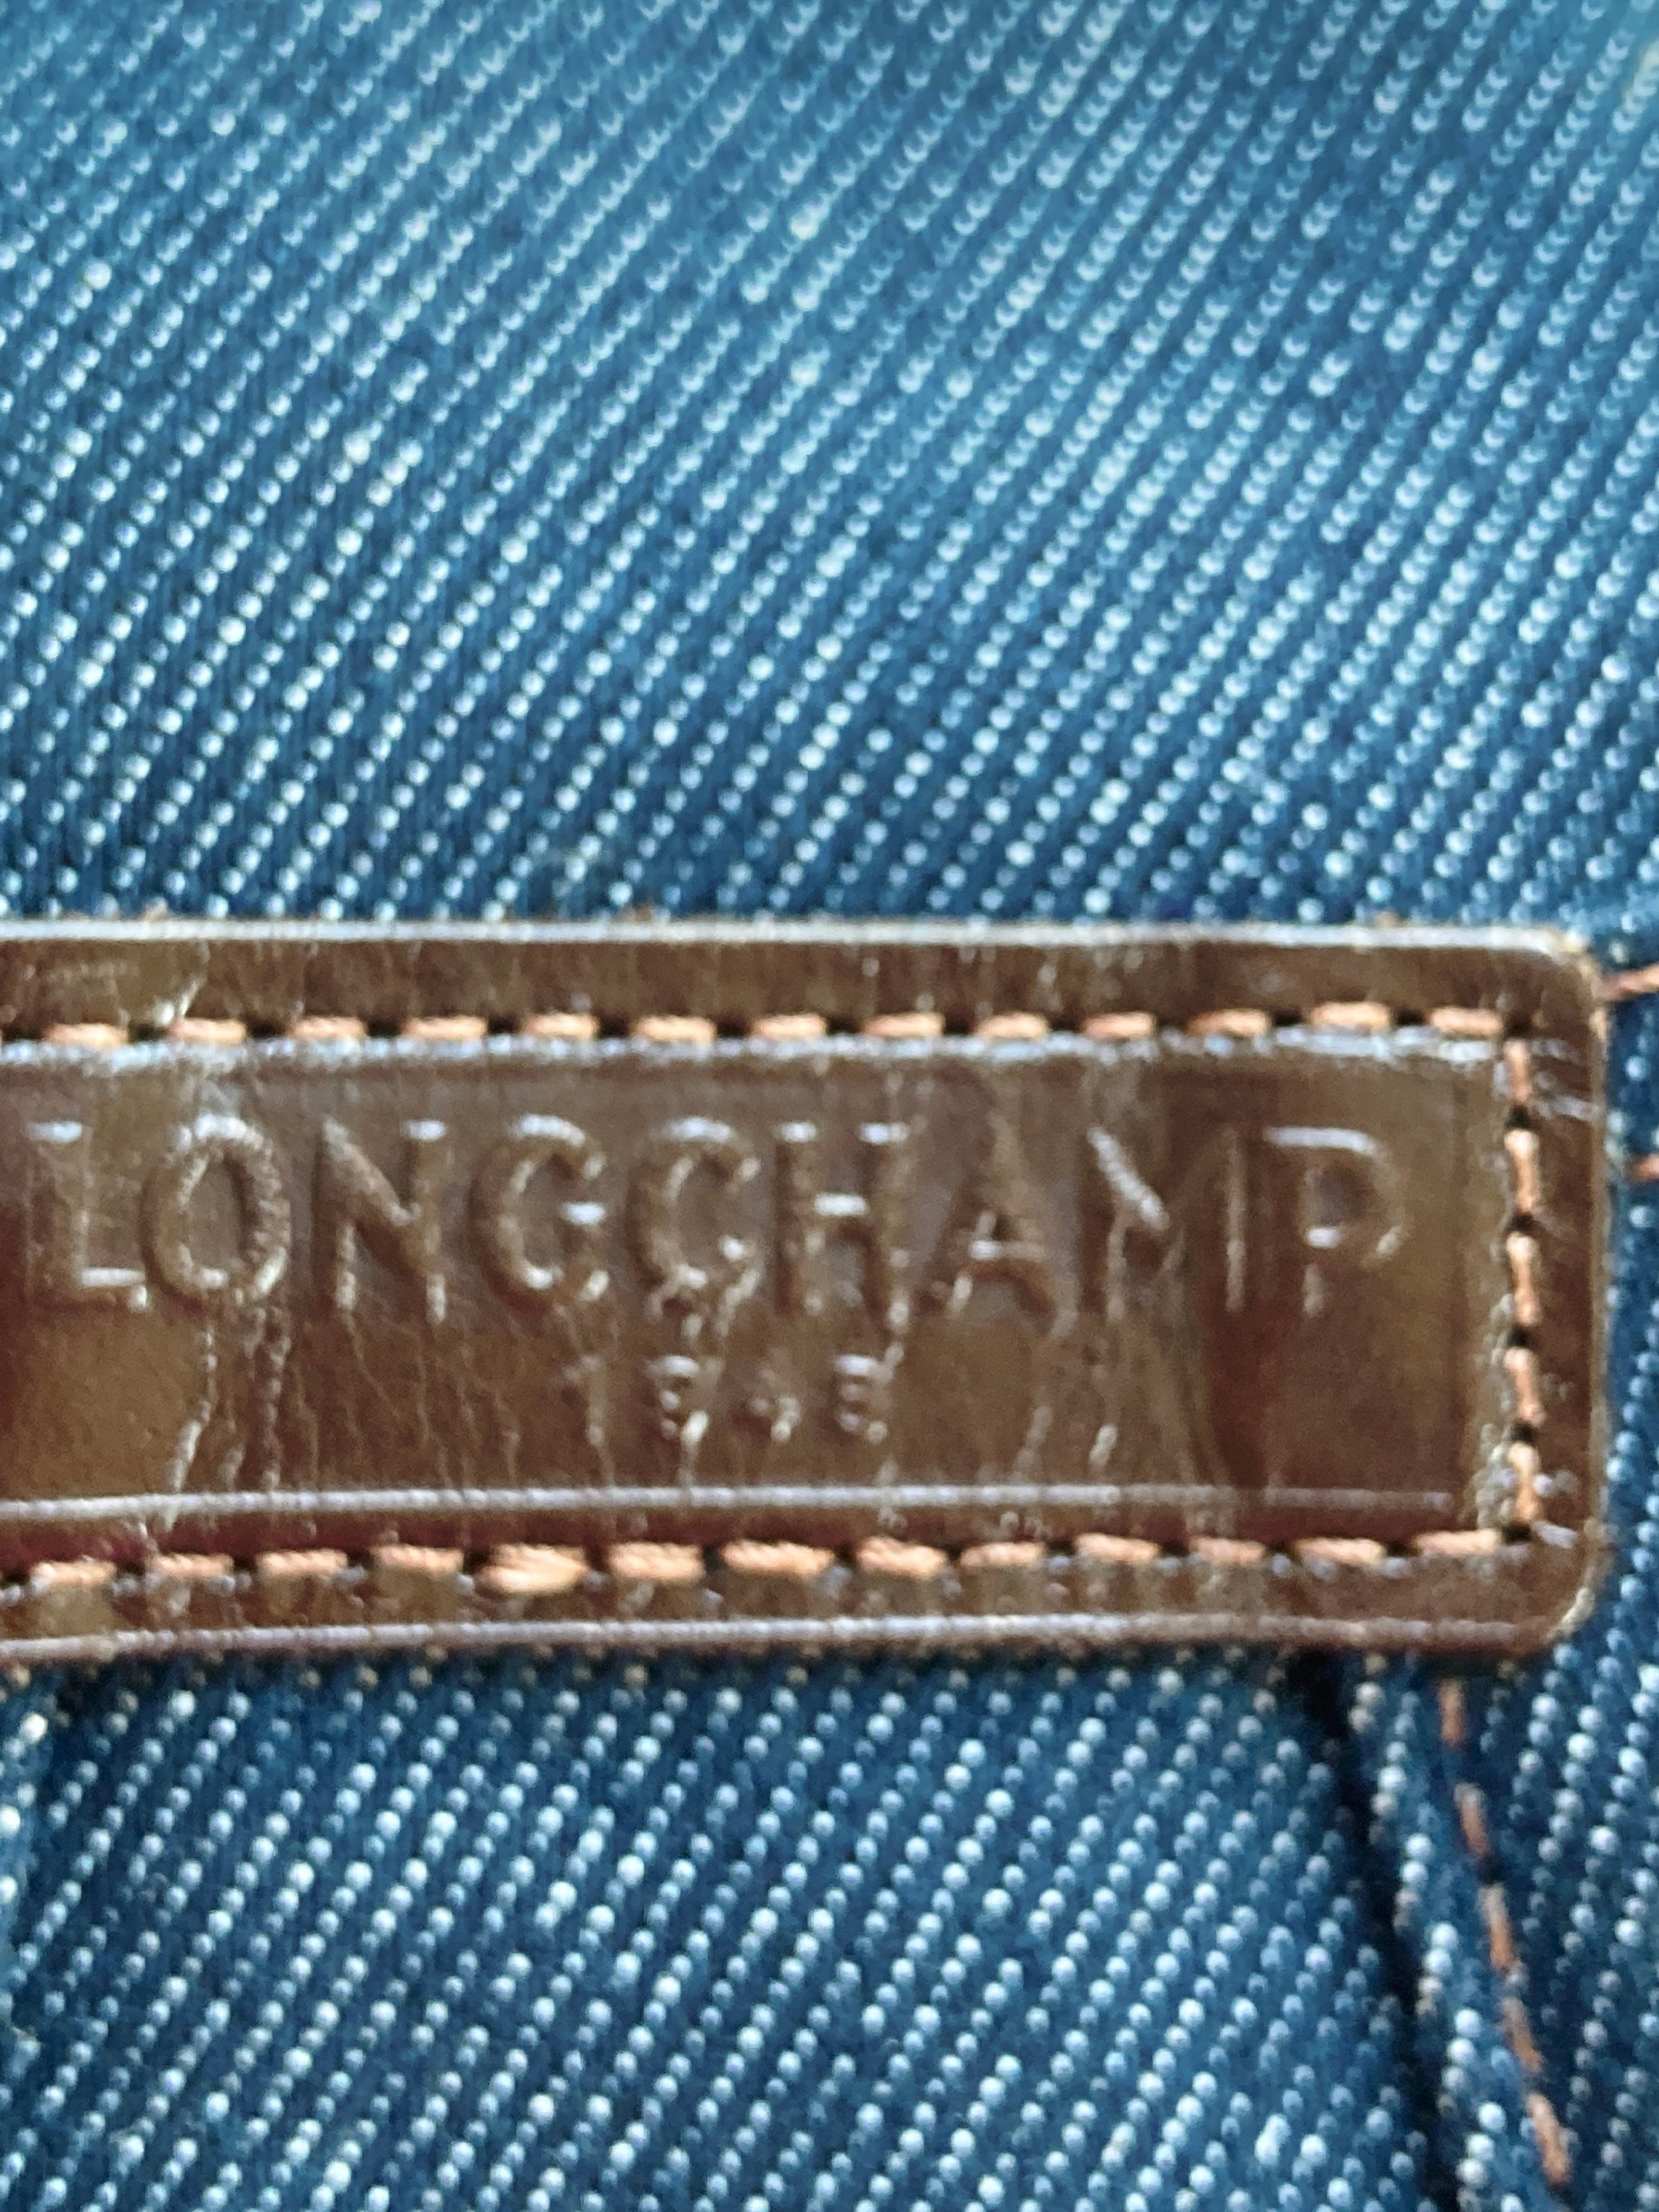 Longchamp Paris Denim Hobo Bag – Second Serve